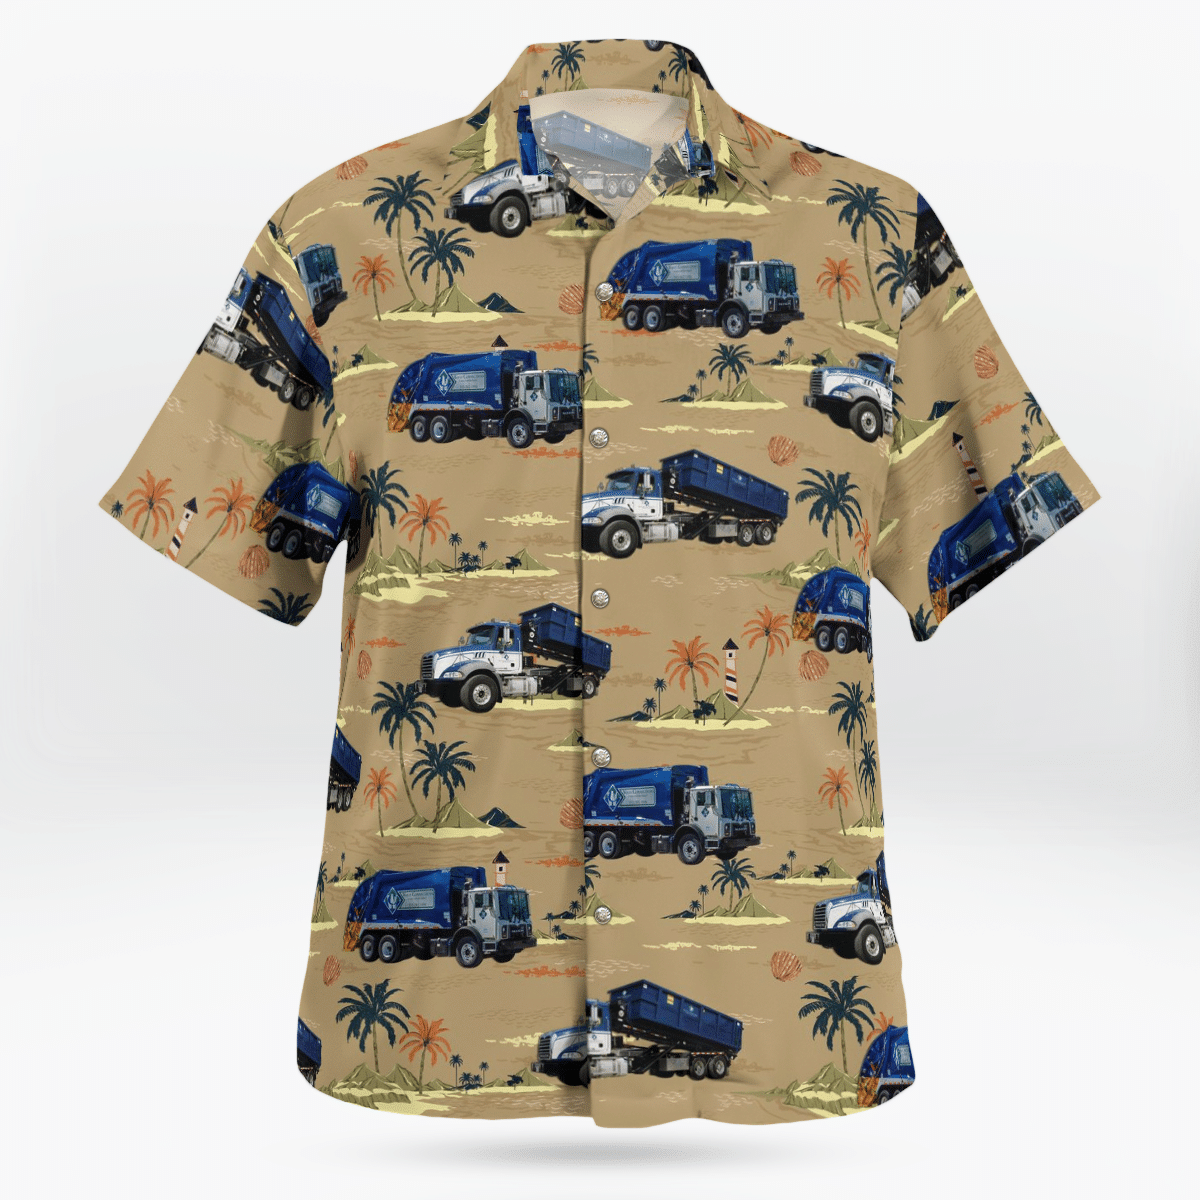 BEST Waste Connections of Canada Hawaiian Shirt2